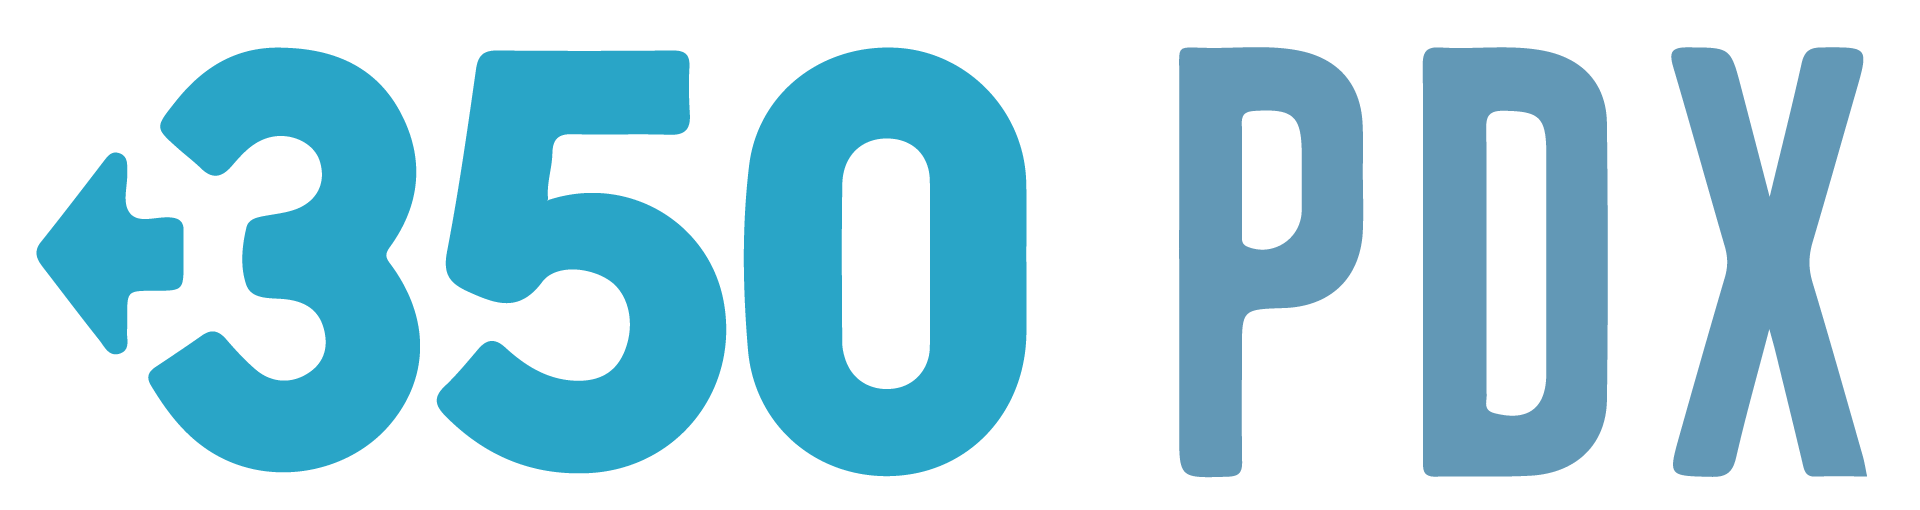 PDX Logo - 350PDX Home